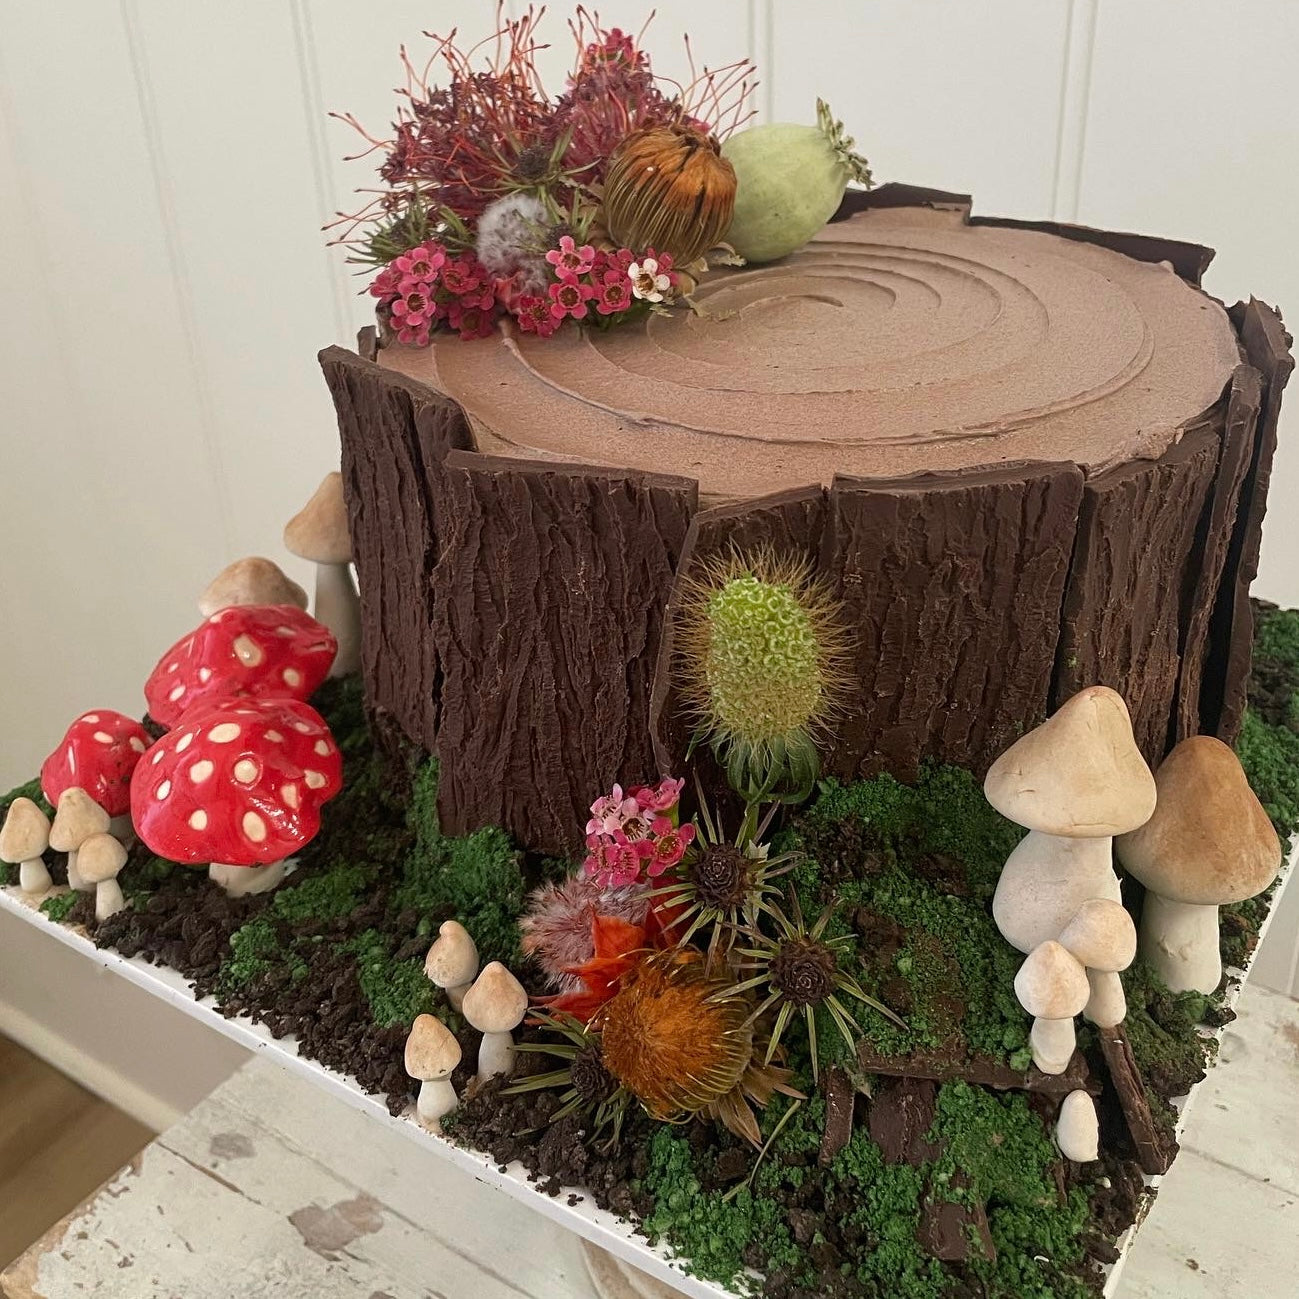 Enchanted Forest Cake